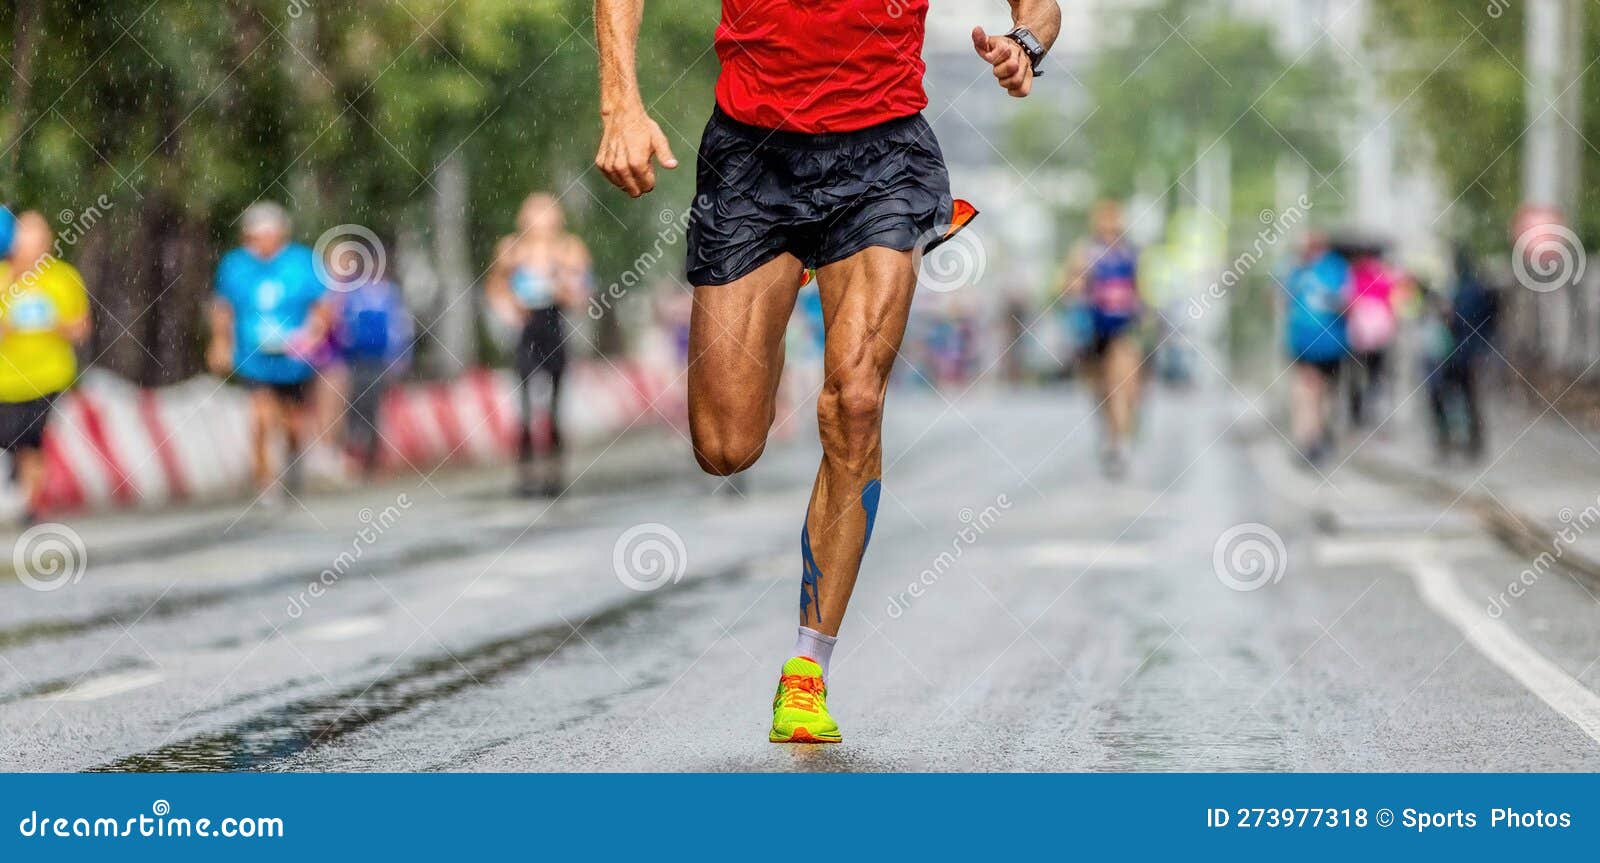 Male Runner Leader Running Marathon City Race Stock Photo - Image of ...